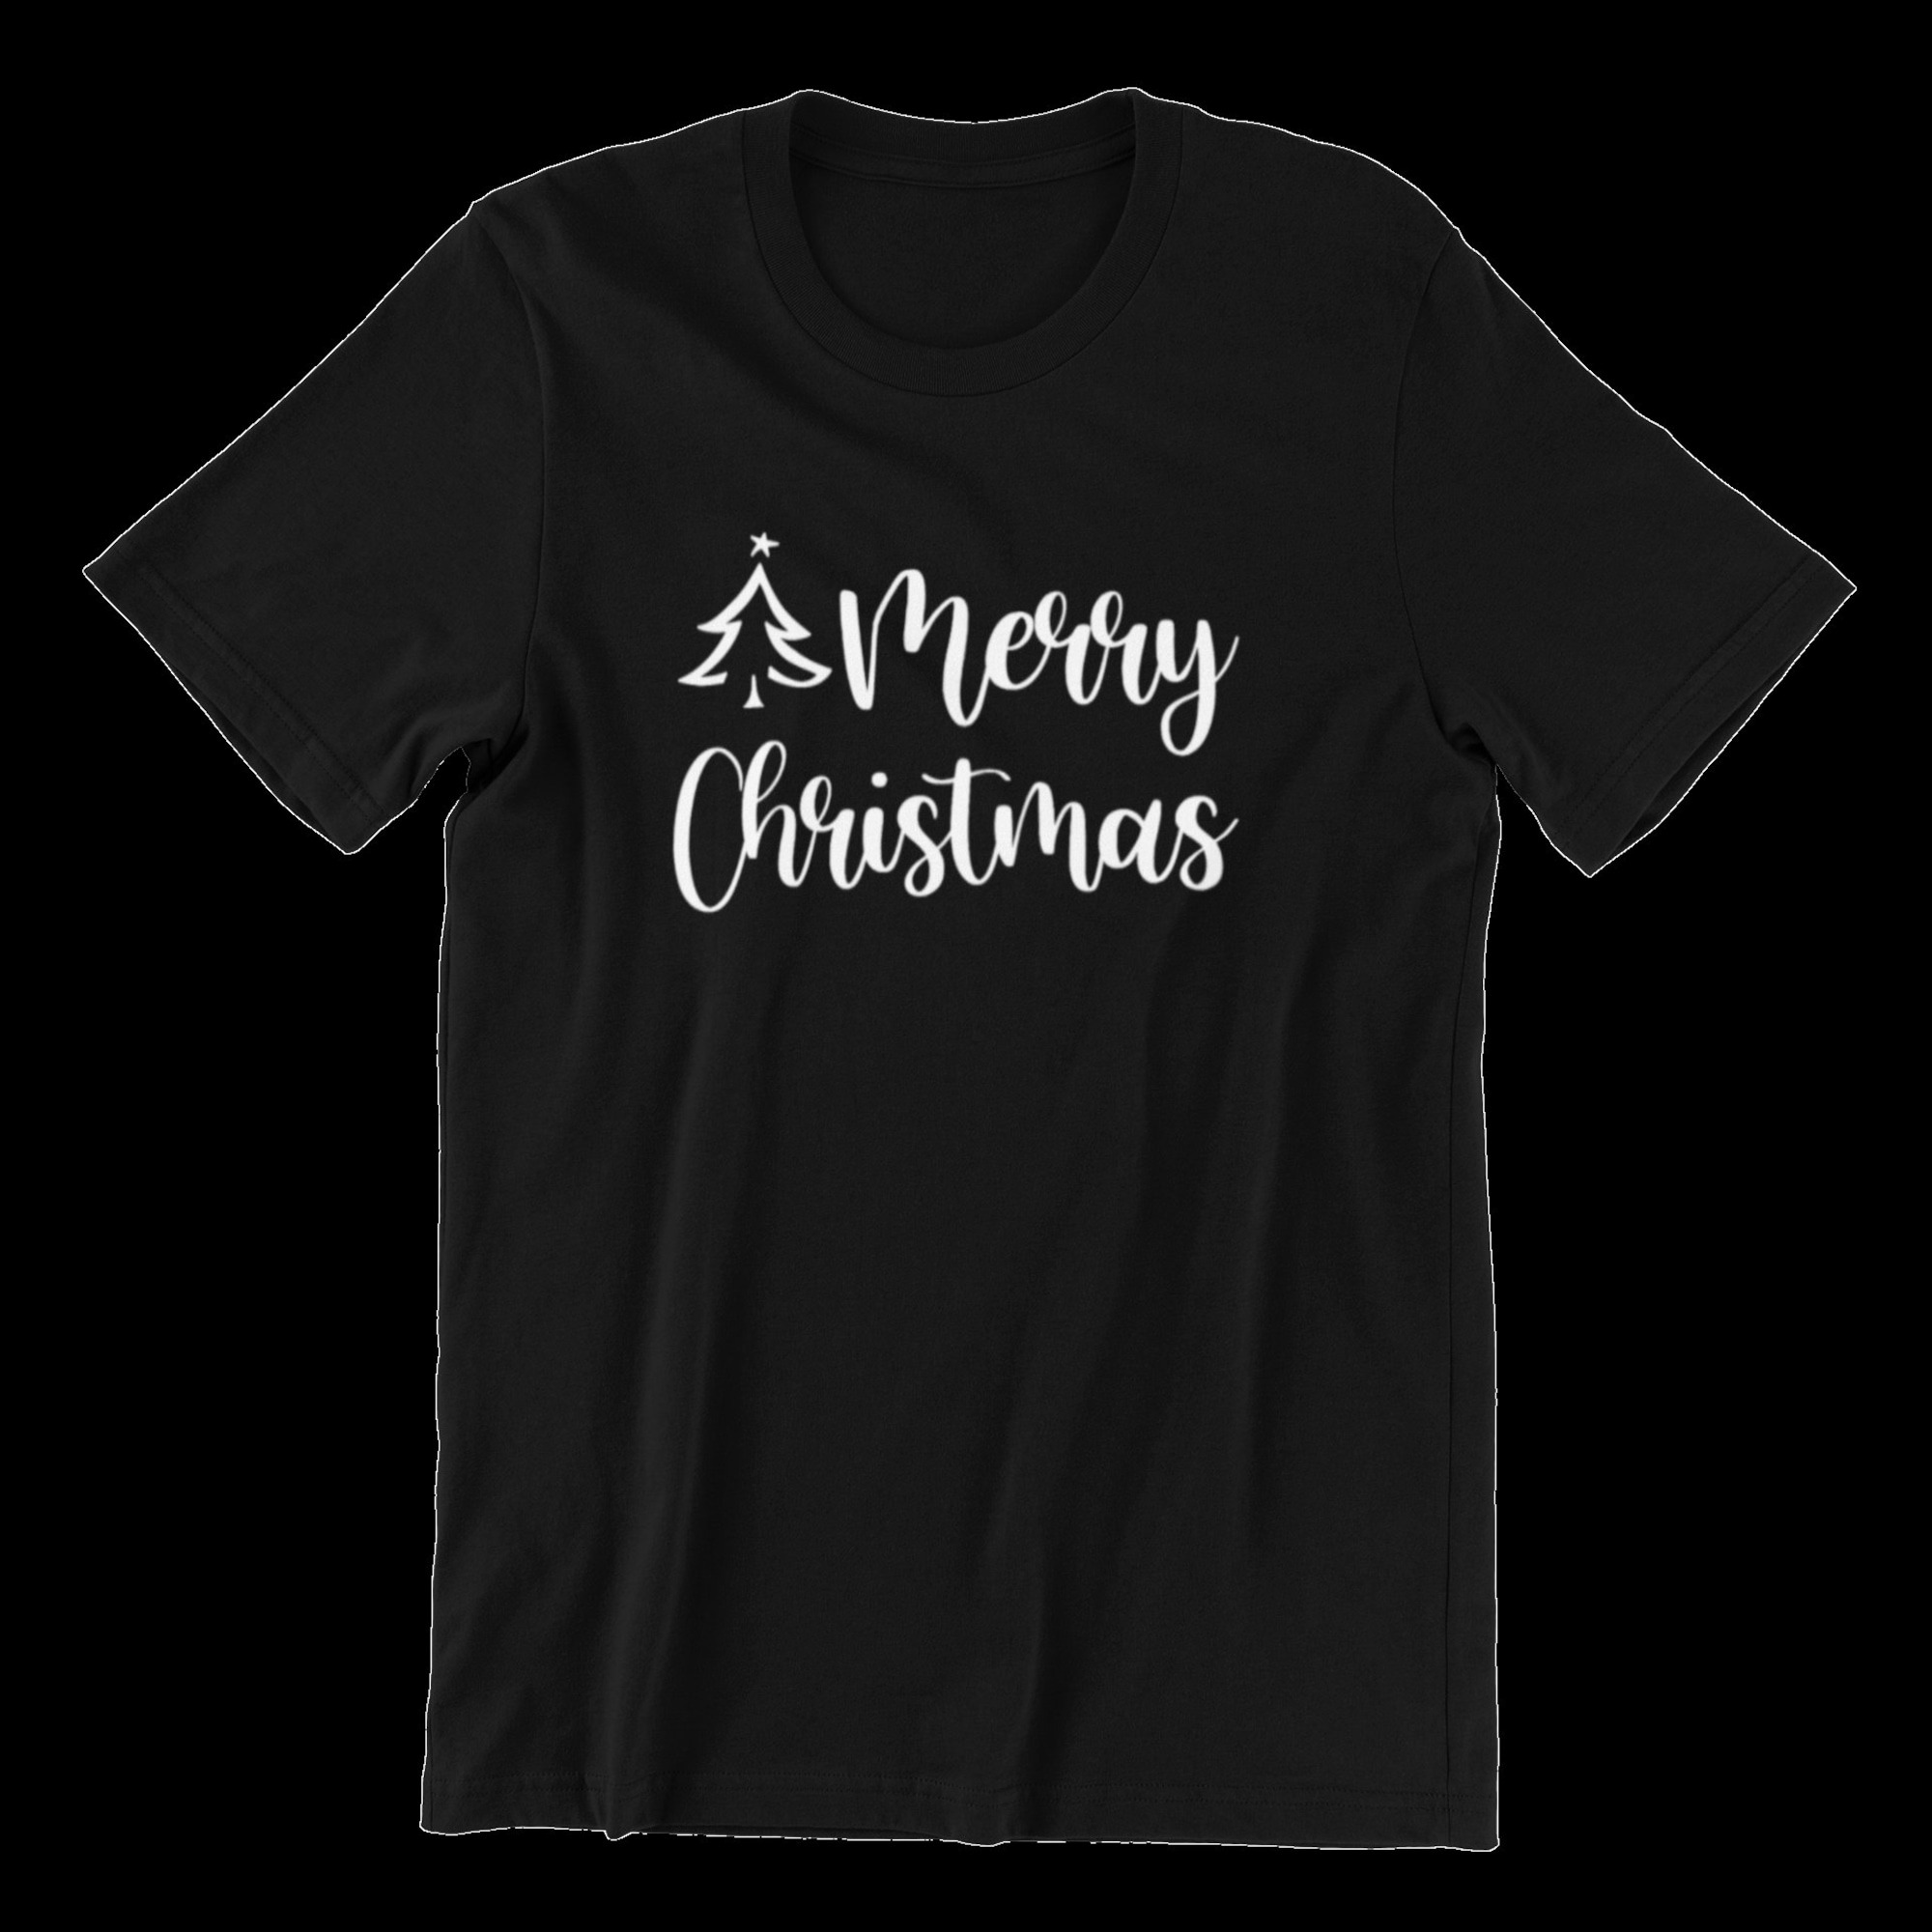 Merry Christmas T-shirt, Christmas T-shirts, Male Shirts, Female T-Shirts, Holiday Apparel, Print on Demand